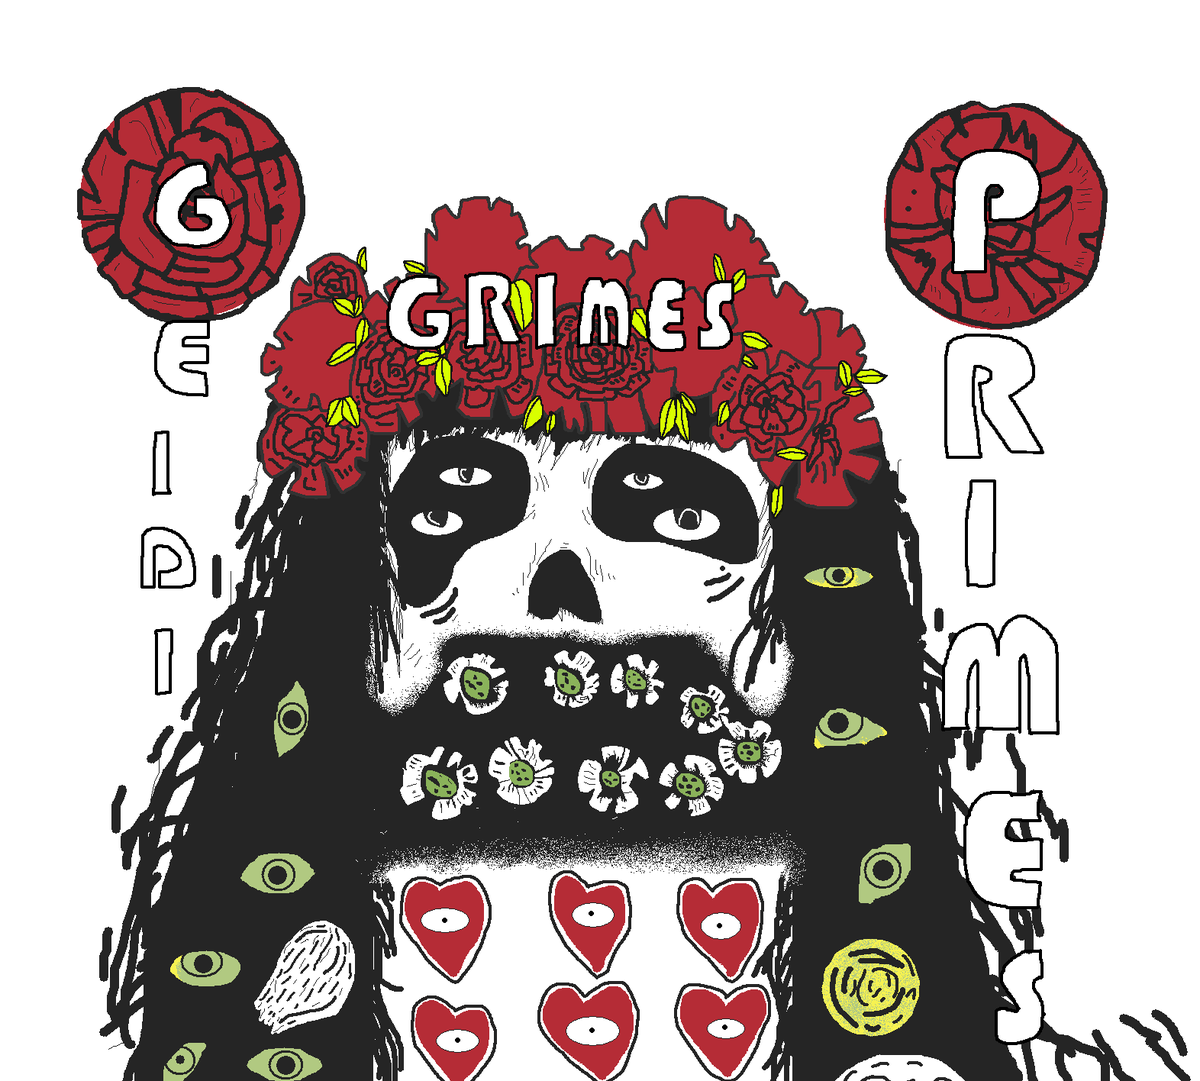 ShittyAlbumArt on Twitter: "Grimes - Geidi Primes. #Art. @Grimezsz  #shittyalbumart #grimes http://t.co/NKgXi16iJI"